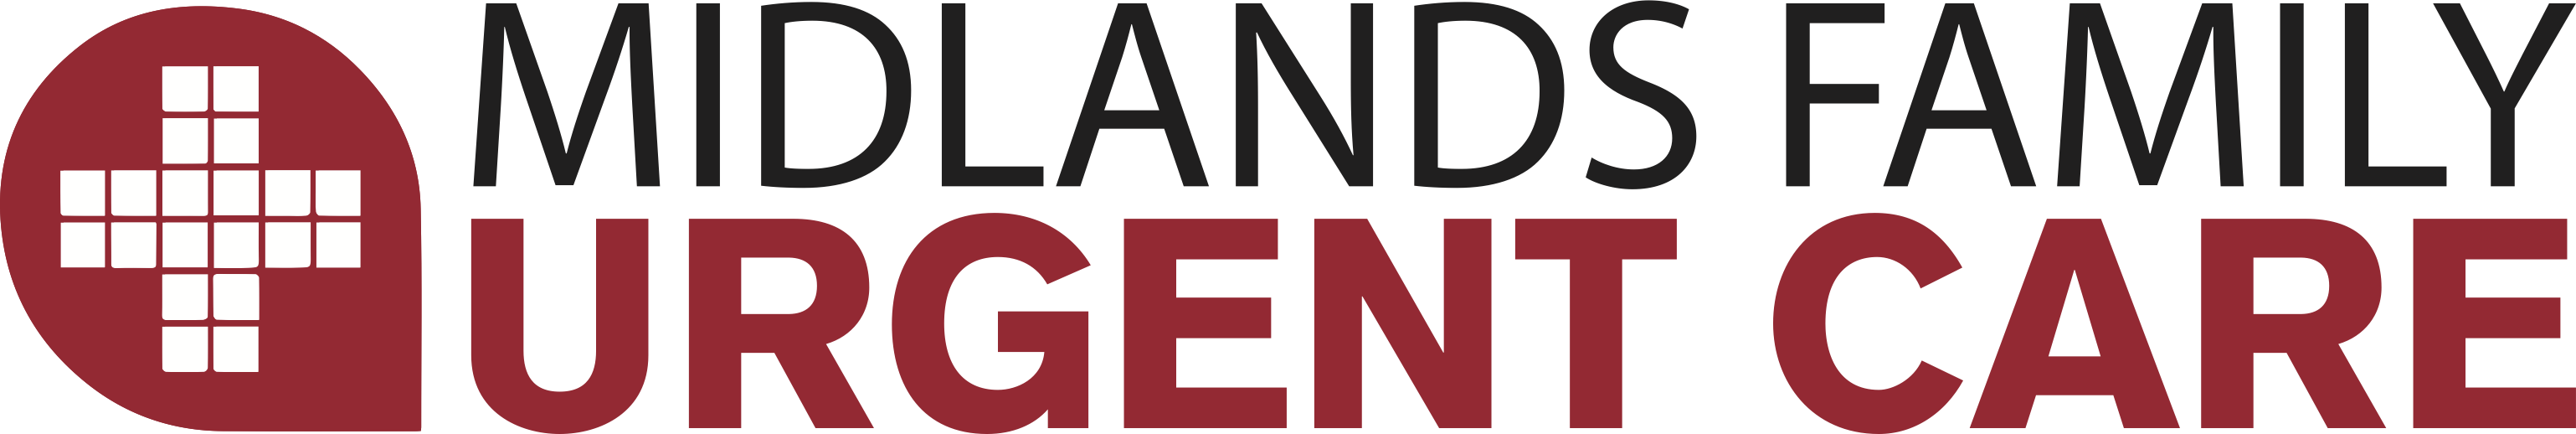 Midlands Family Urgent Care Logo